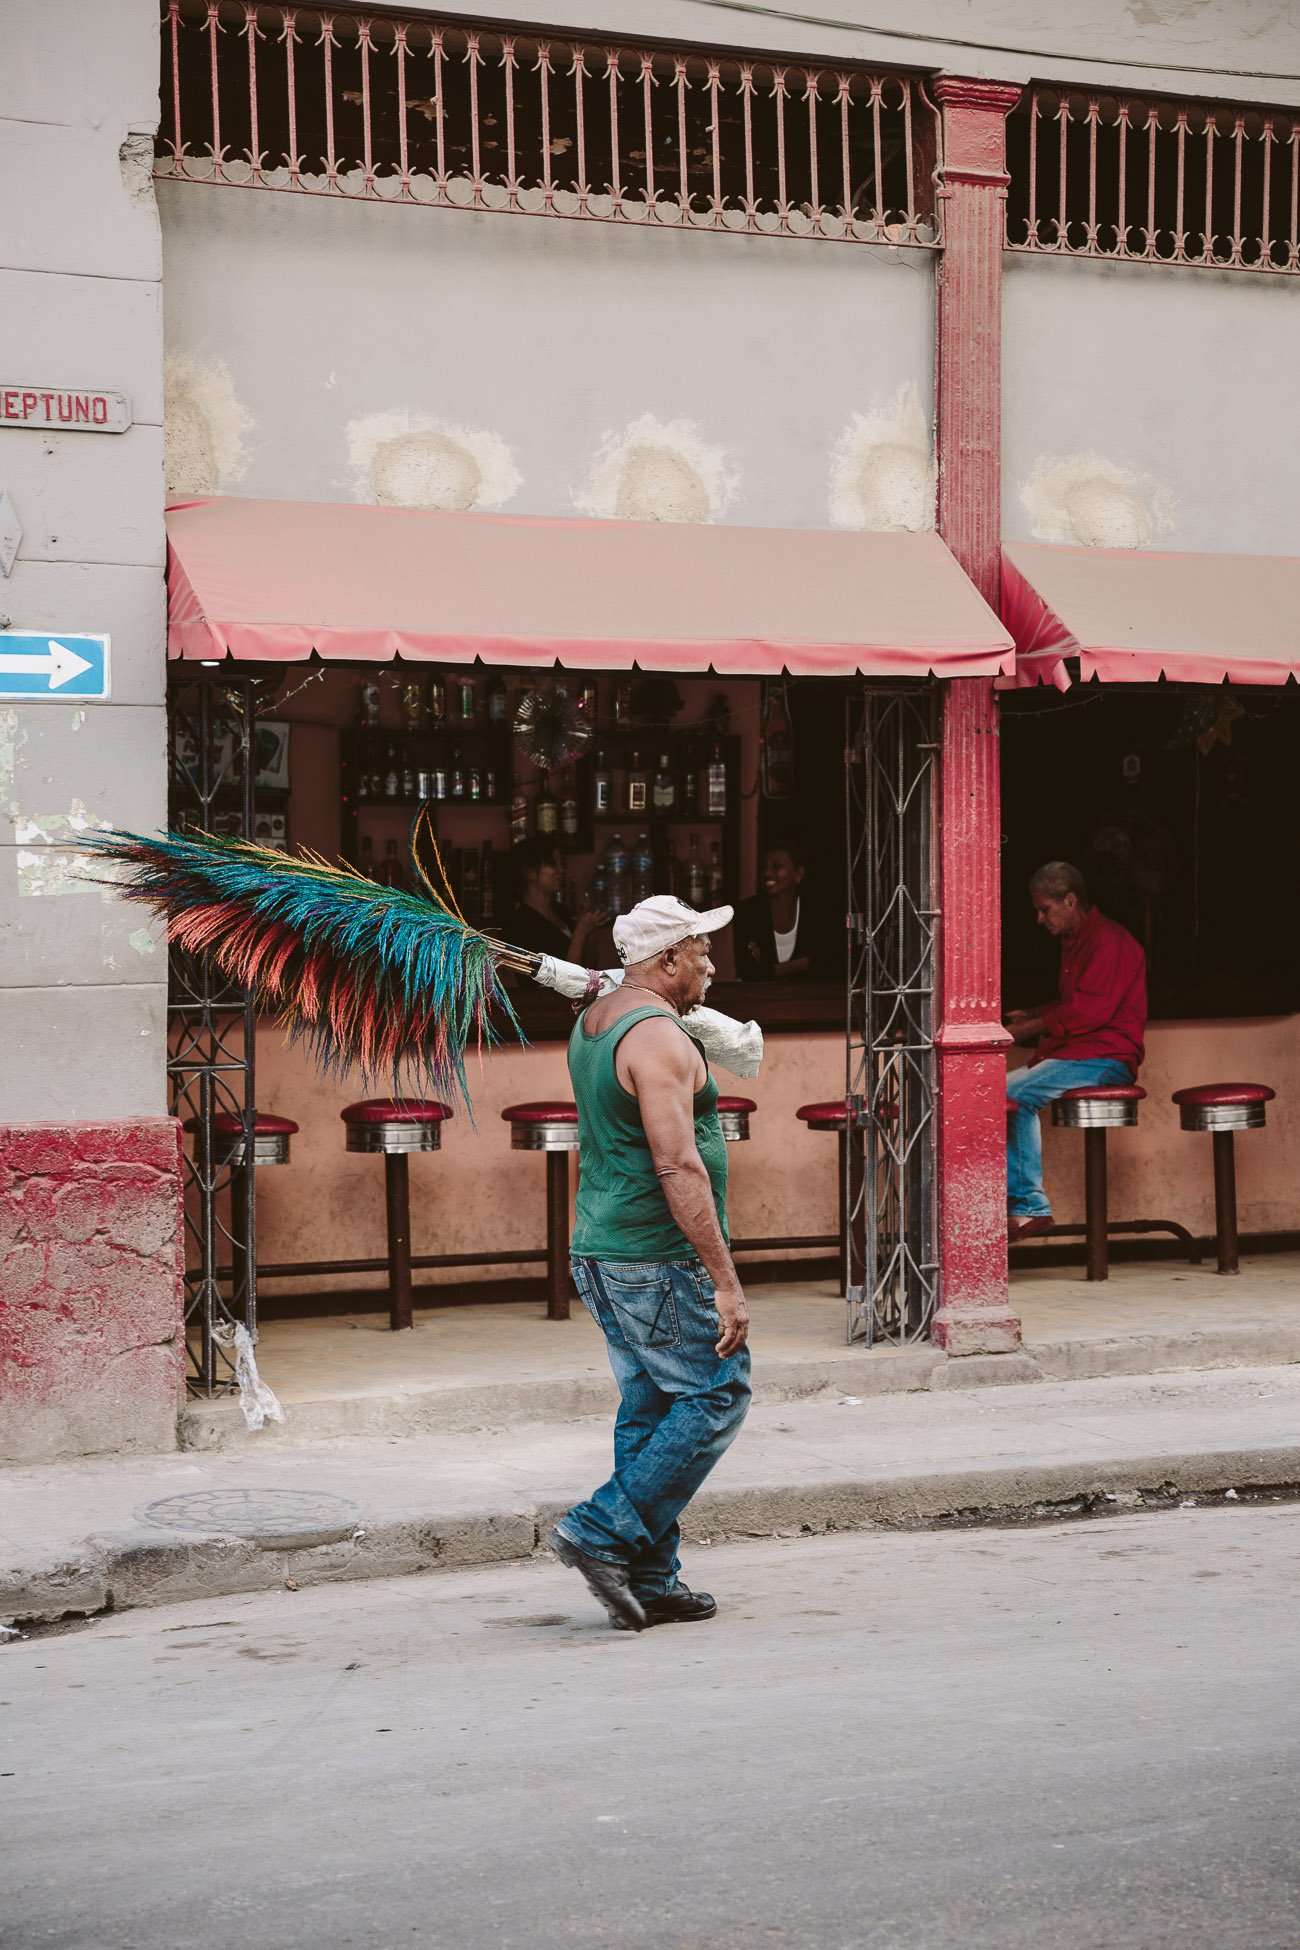 Street scene in Havana Cuba